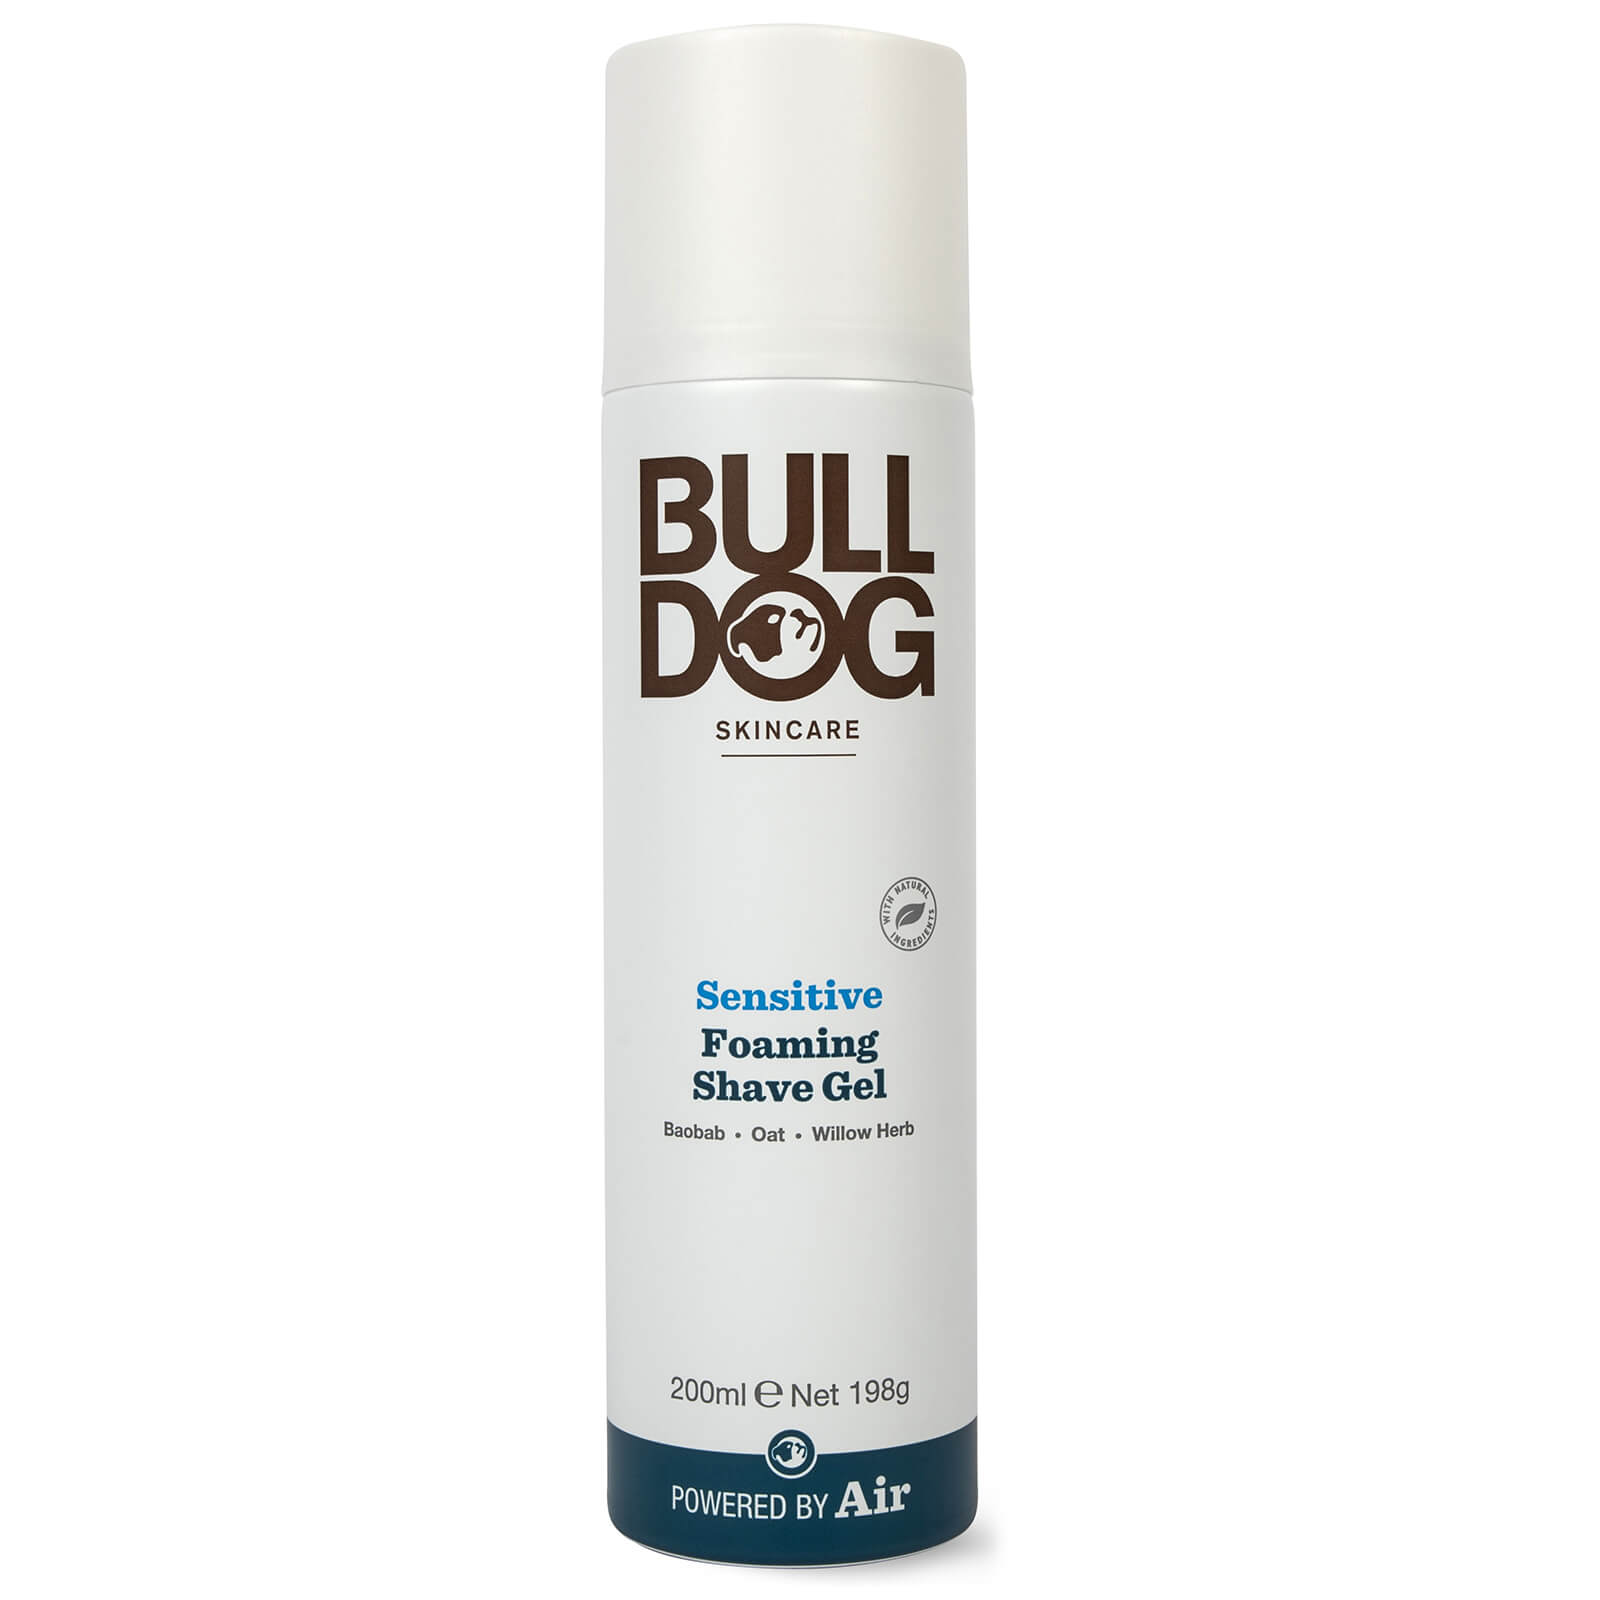 Bulldog Sensitive Foaming Shave Gel 200ml lookfantastic.com imagine